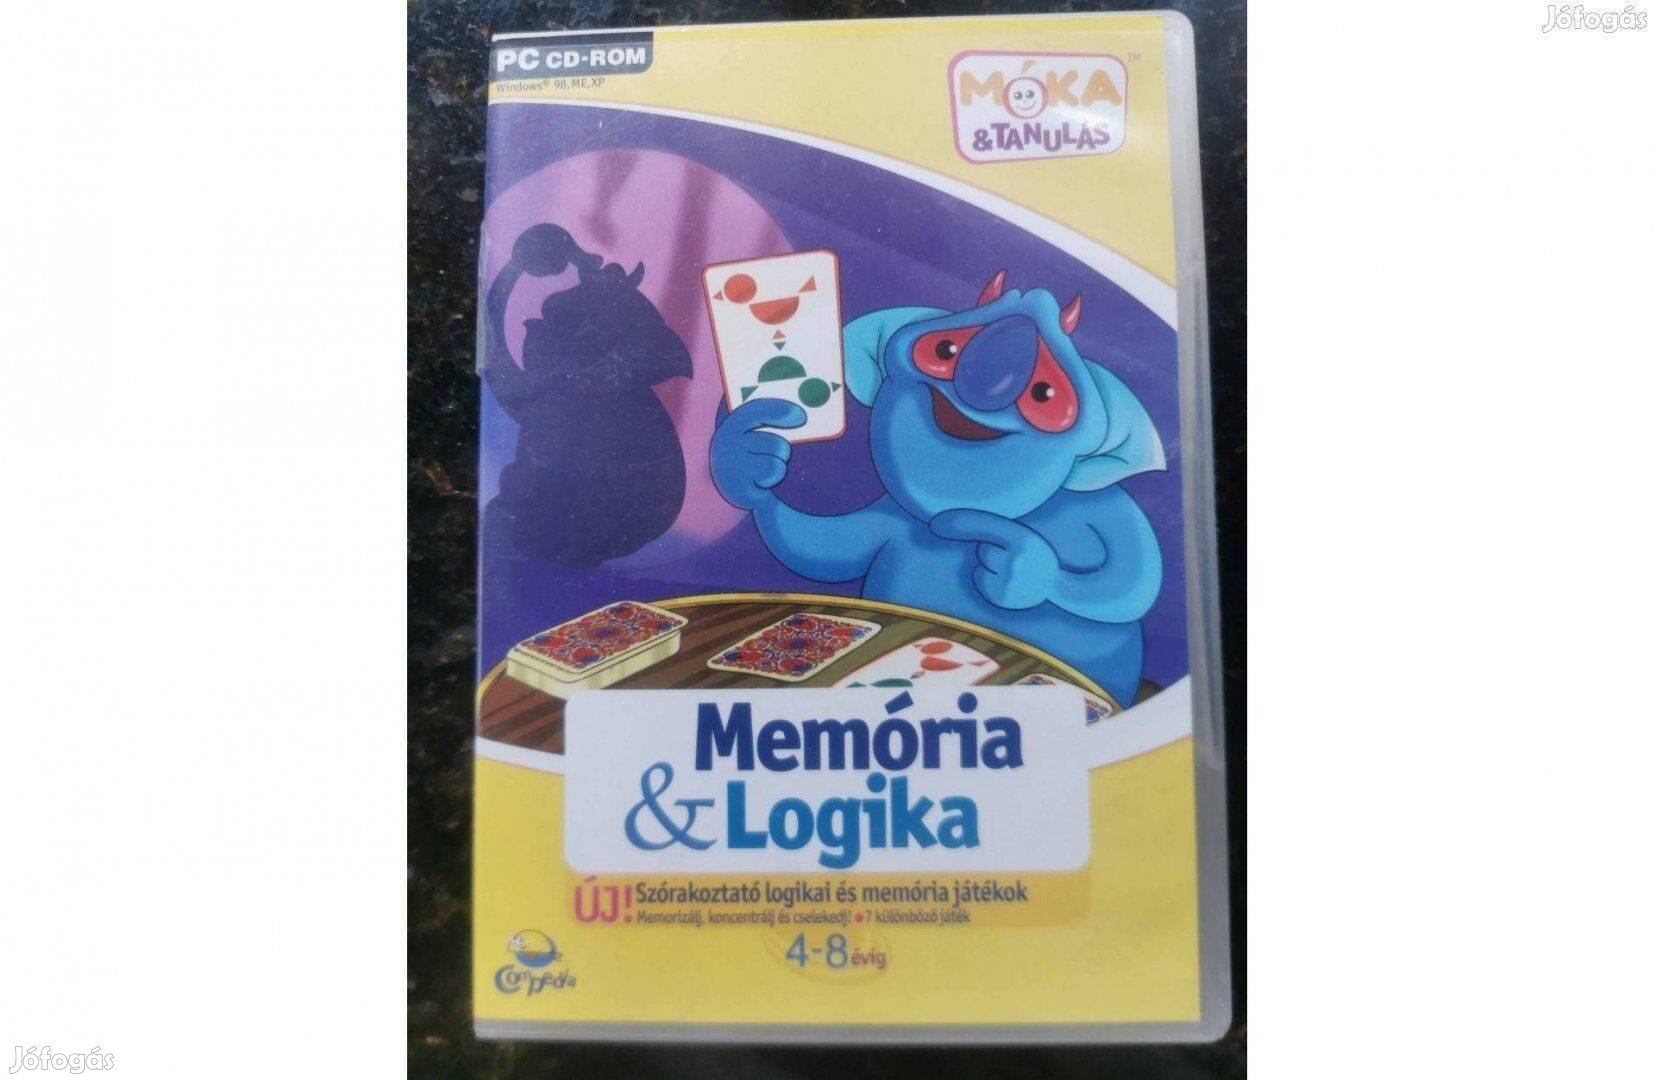 Memória & Logika PC CD-rom, 4-8 éves korig